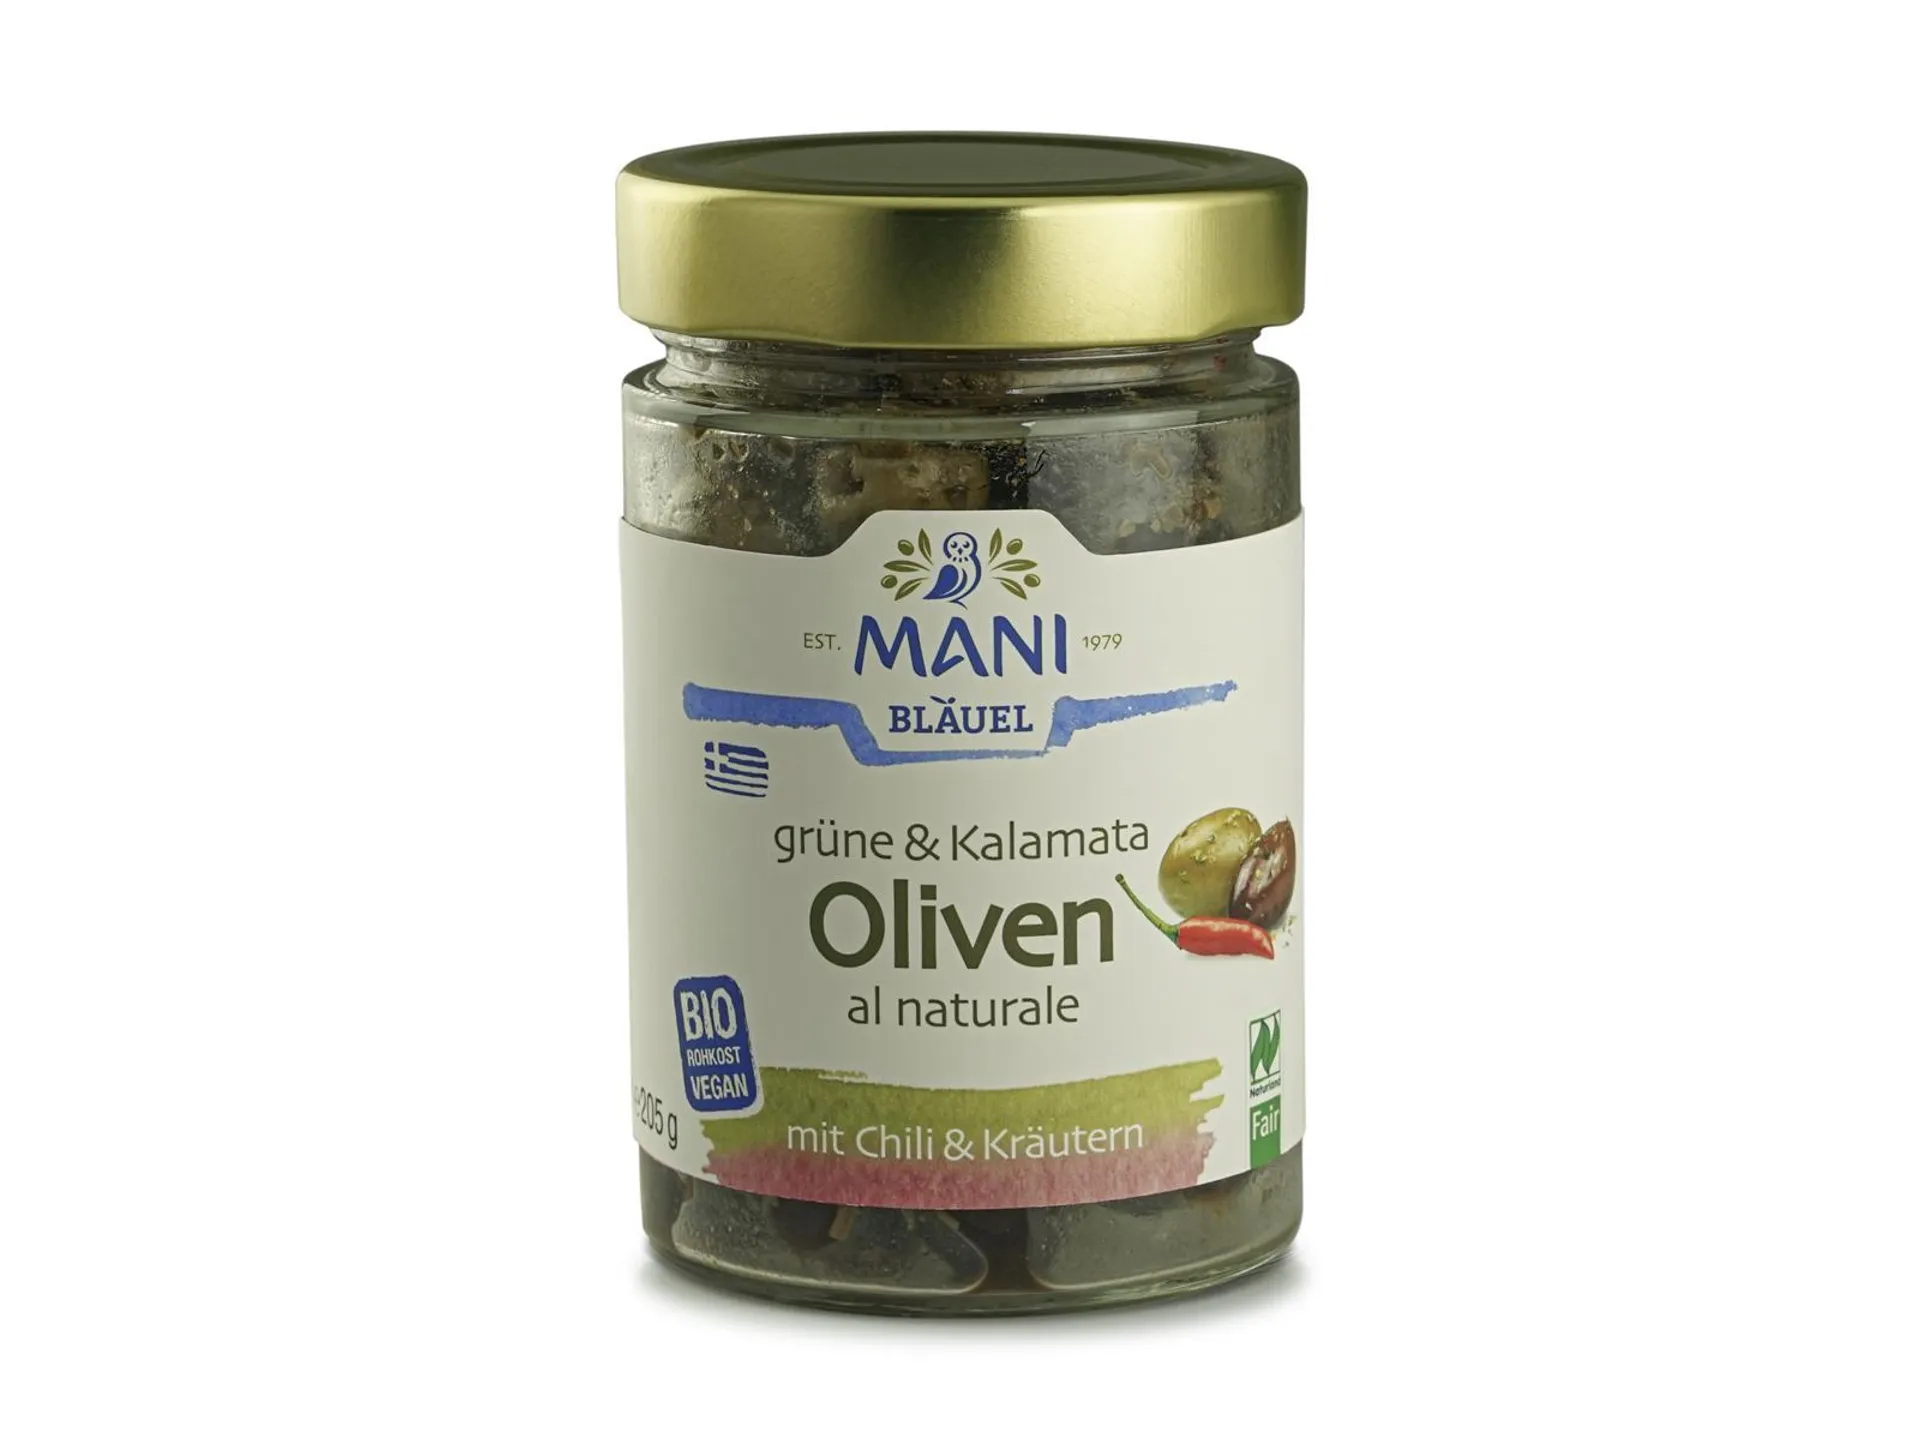 Mani Bläuel Grüne & Kalamata Oliven al naturale Chili & Kräuter 205g